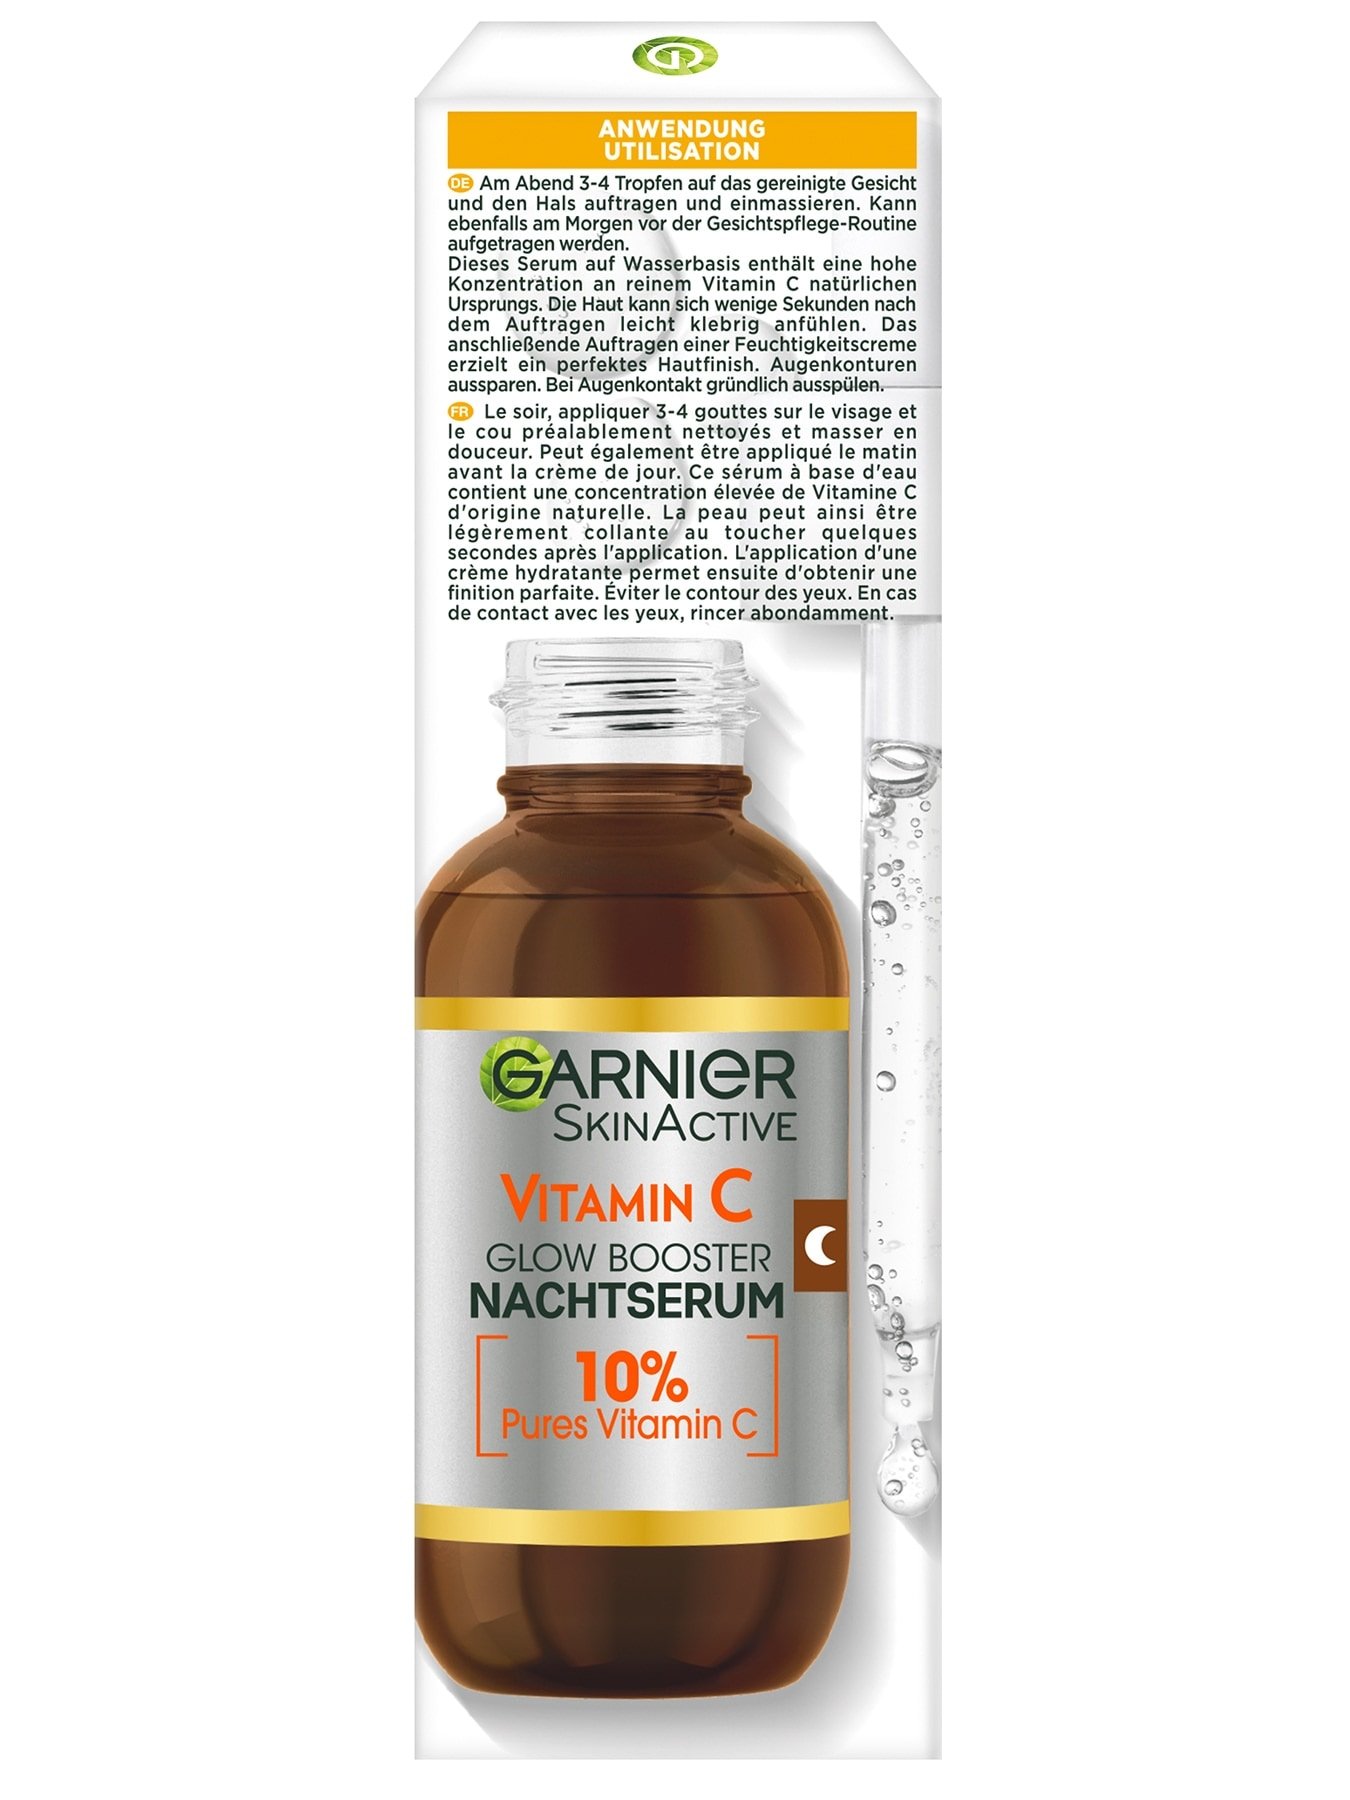 SkinActive Vitamin C Glow Booster Nachtserum - Verpackung & Produkt